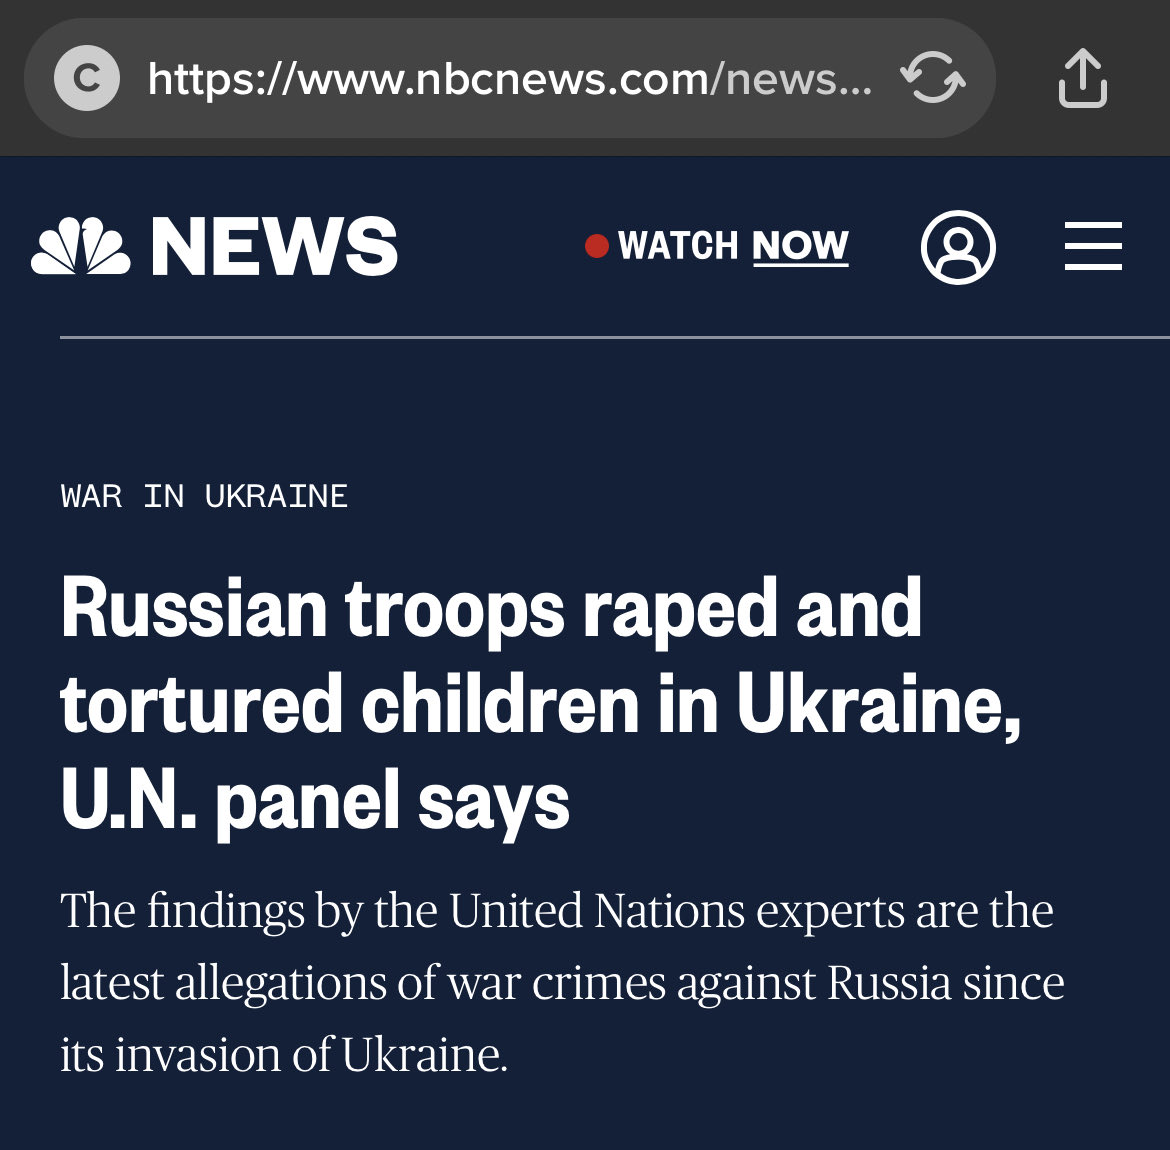 @paigeinkansas @MarkwayneMullin @OKCityRyan It currently appears that the senator prefers supporting russians raping Ukrainian children